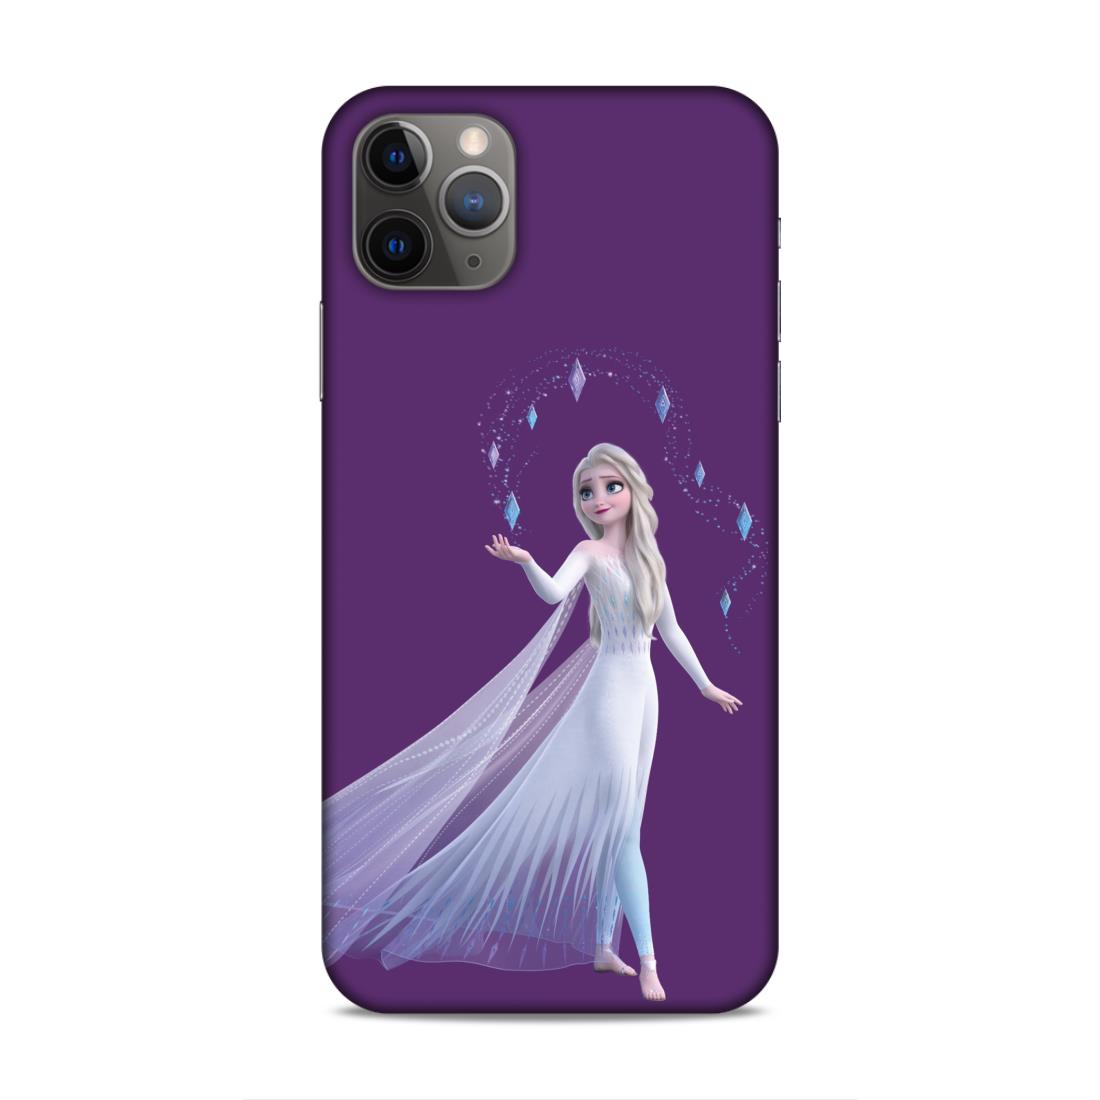 Elsa in Frozen 2 Hard Back Case For Apple iPhone 11 Pro Max